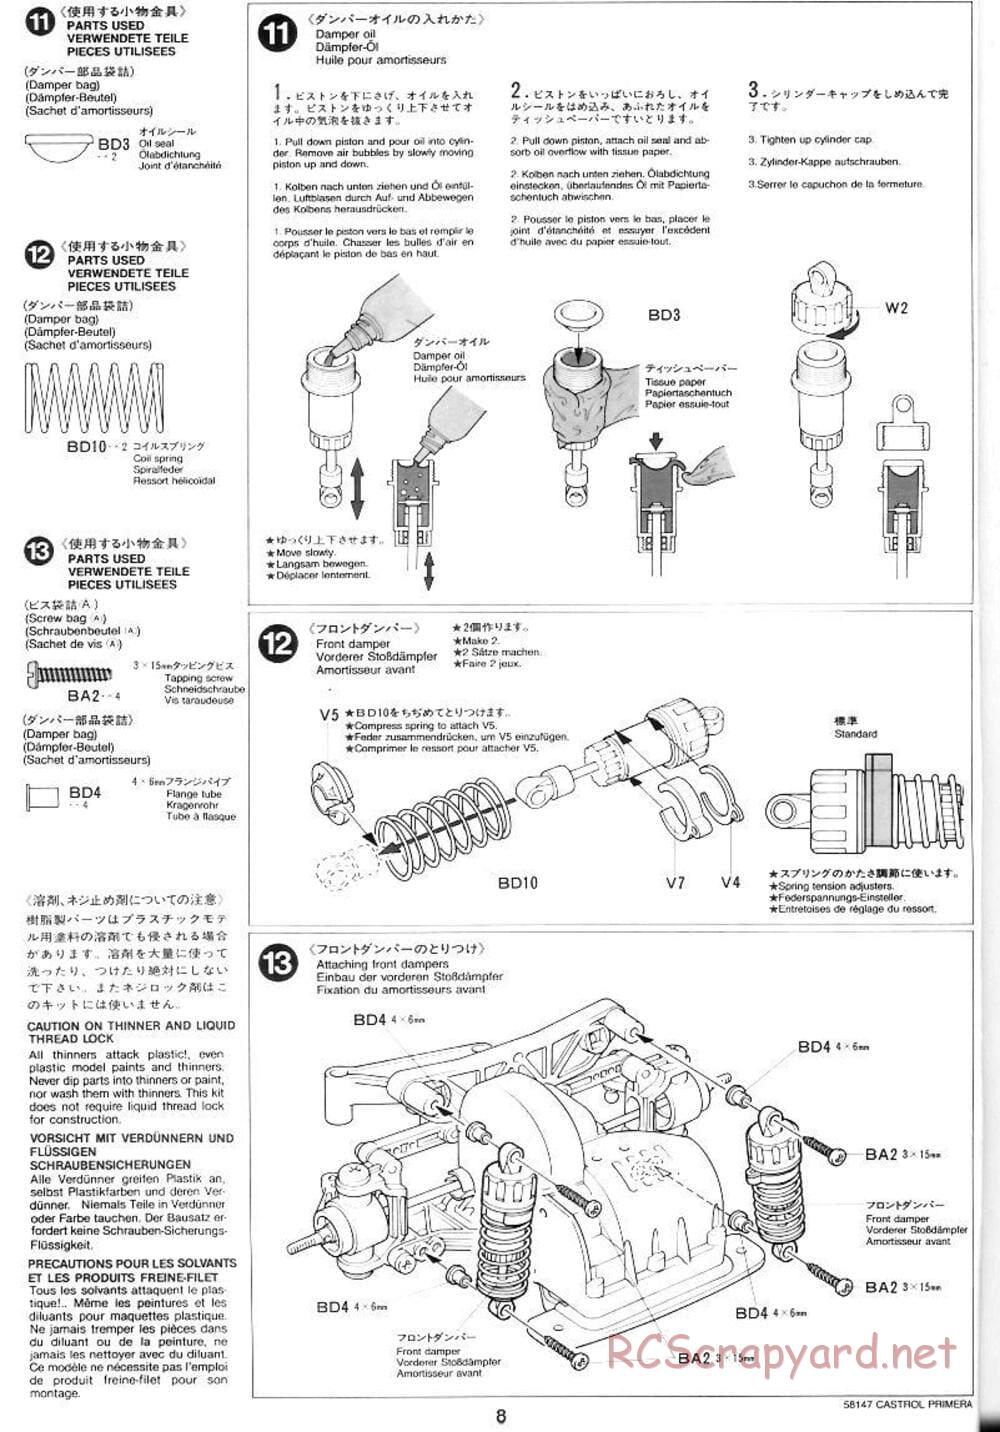 Tamiya - Castrol Nissan Primera JTCC - FF-01 Chassis - Manual - Page 8